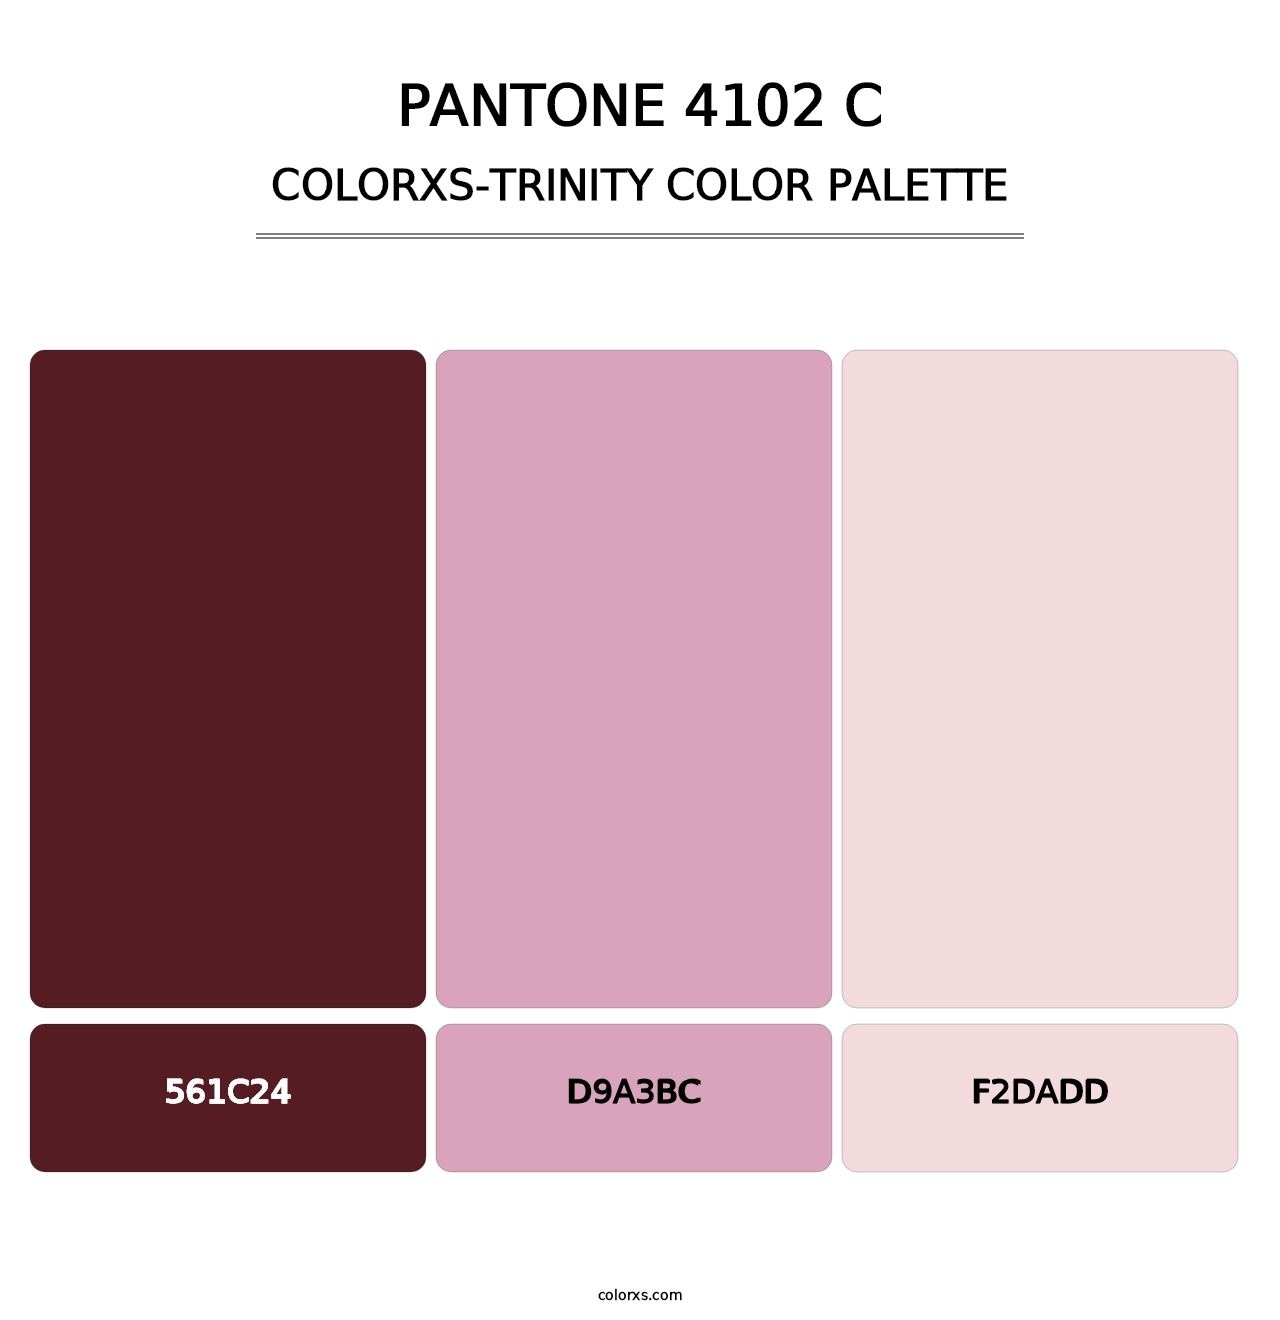 PANTONE 4102 C - Colorxs Trinity Palette